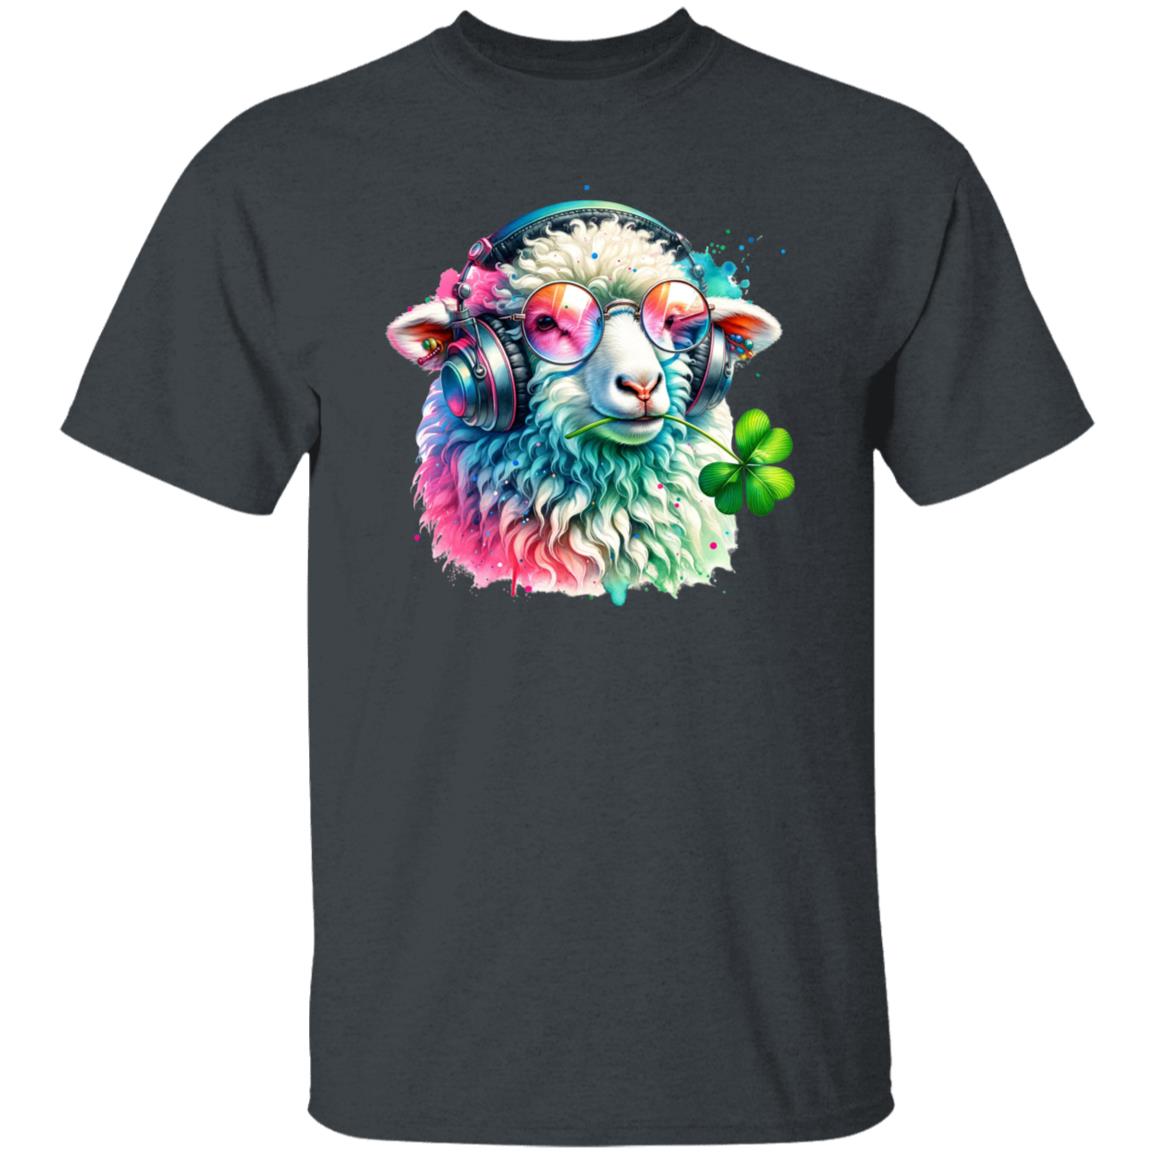 Irish Sheep with clover Colorful Unisex T-Shirt cool sheep farm tee Black Navy Dark Heather-Family-Gift-Planet